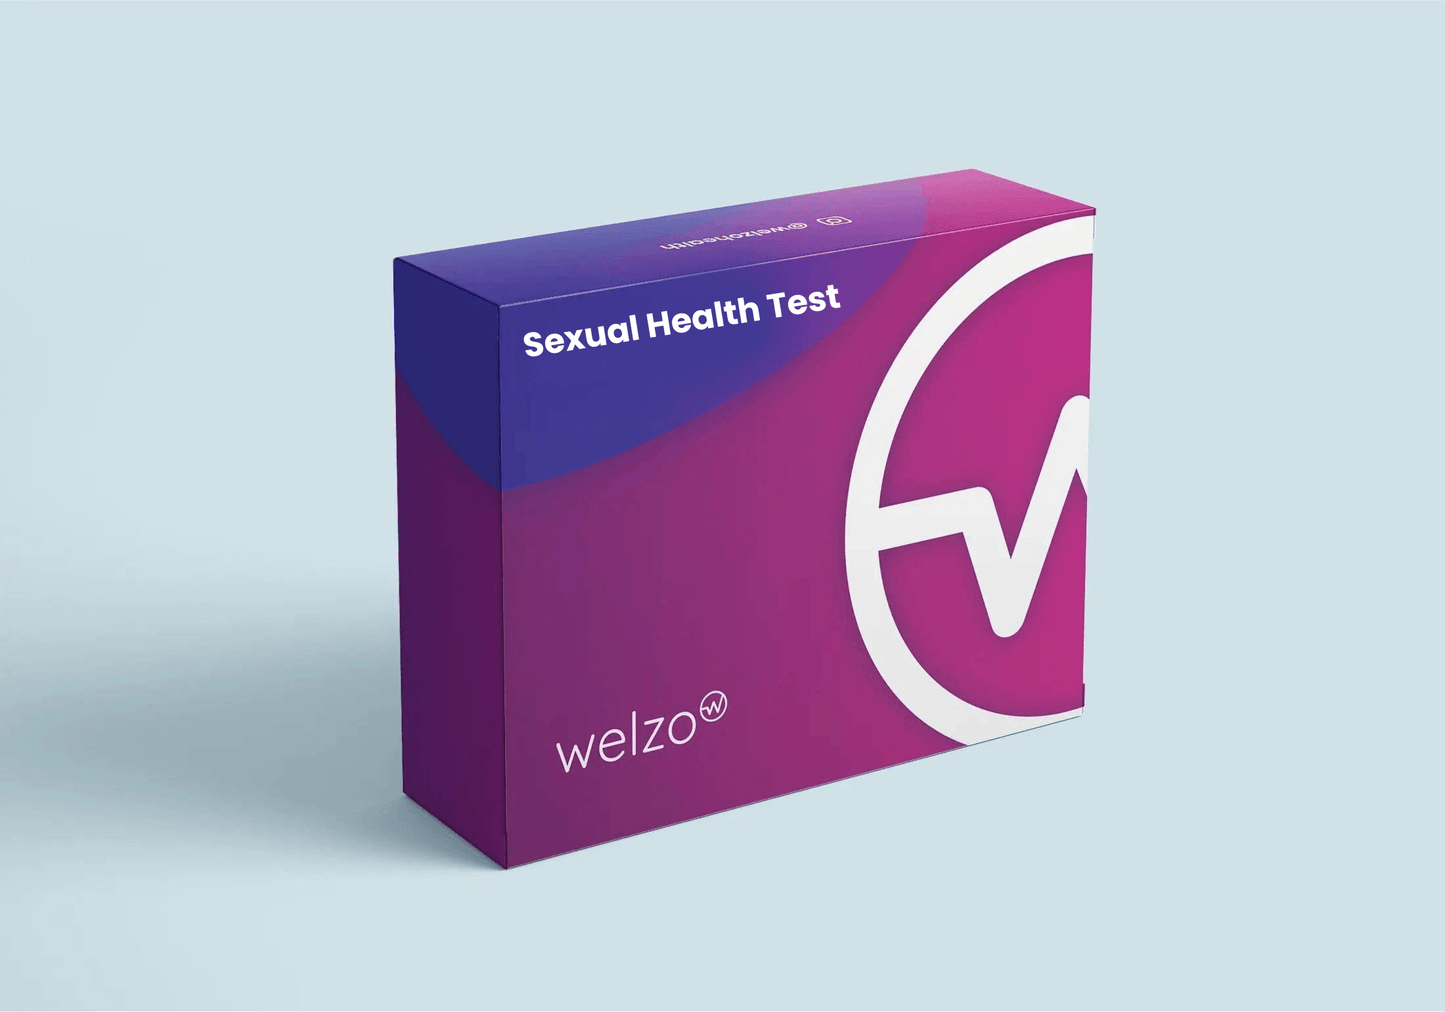 Sexual Health Test 3 - welzo